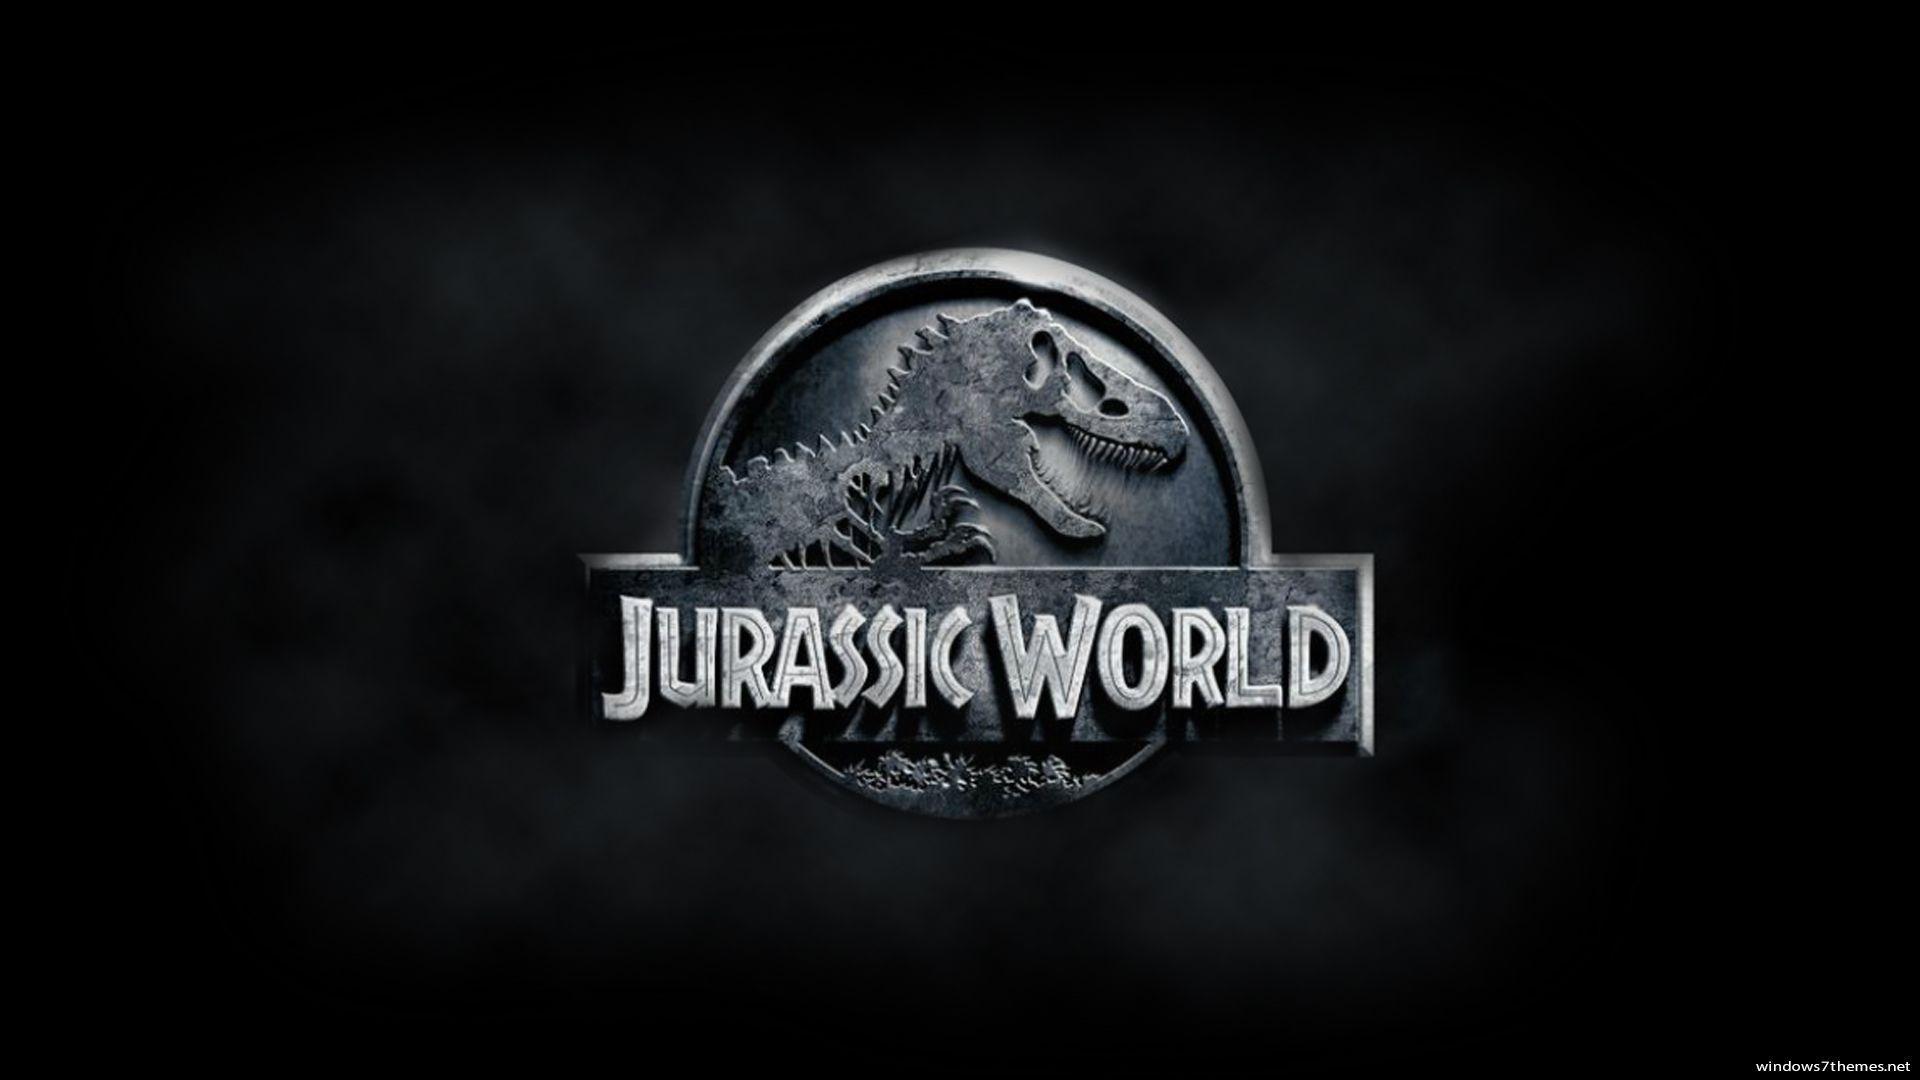 Jurassic World HD Wallpaper for desktop download